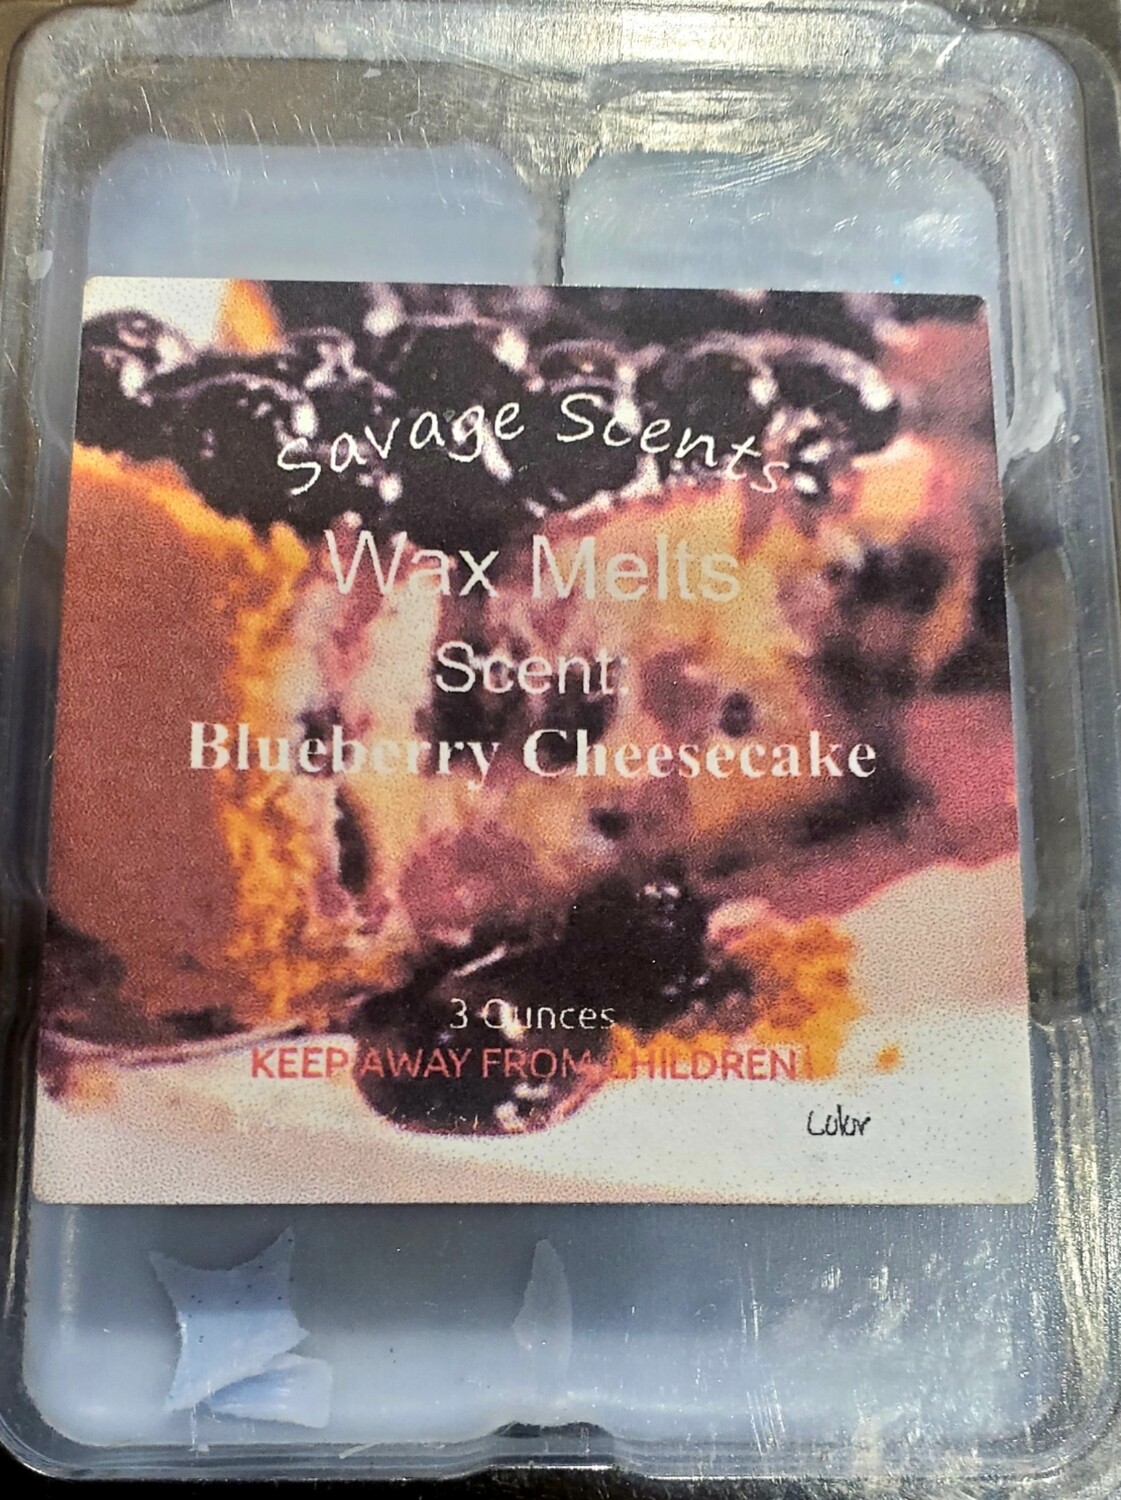 Blueberry Cheesecake Wax Melts